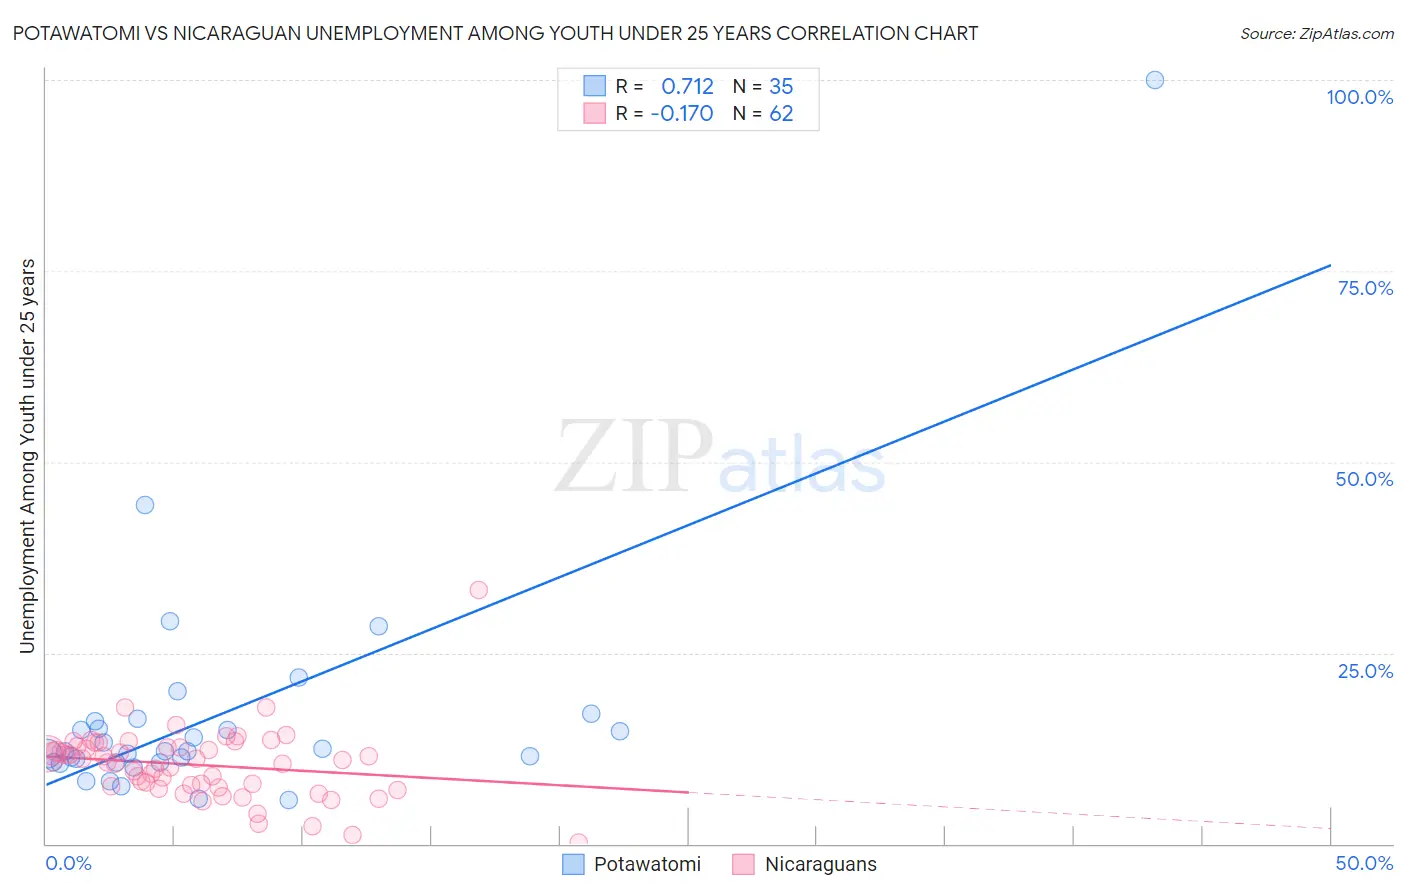 Potawatomi vs Nicaraguan Unemployment Among Youth under 25 years